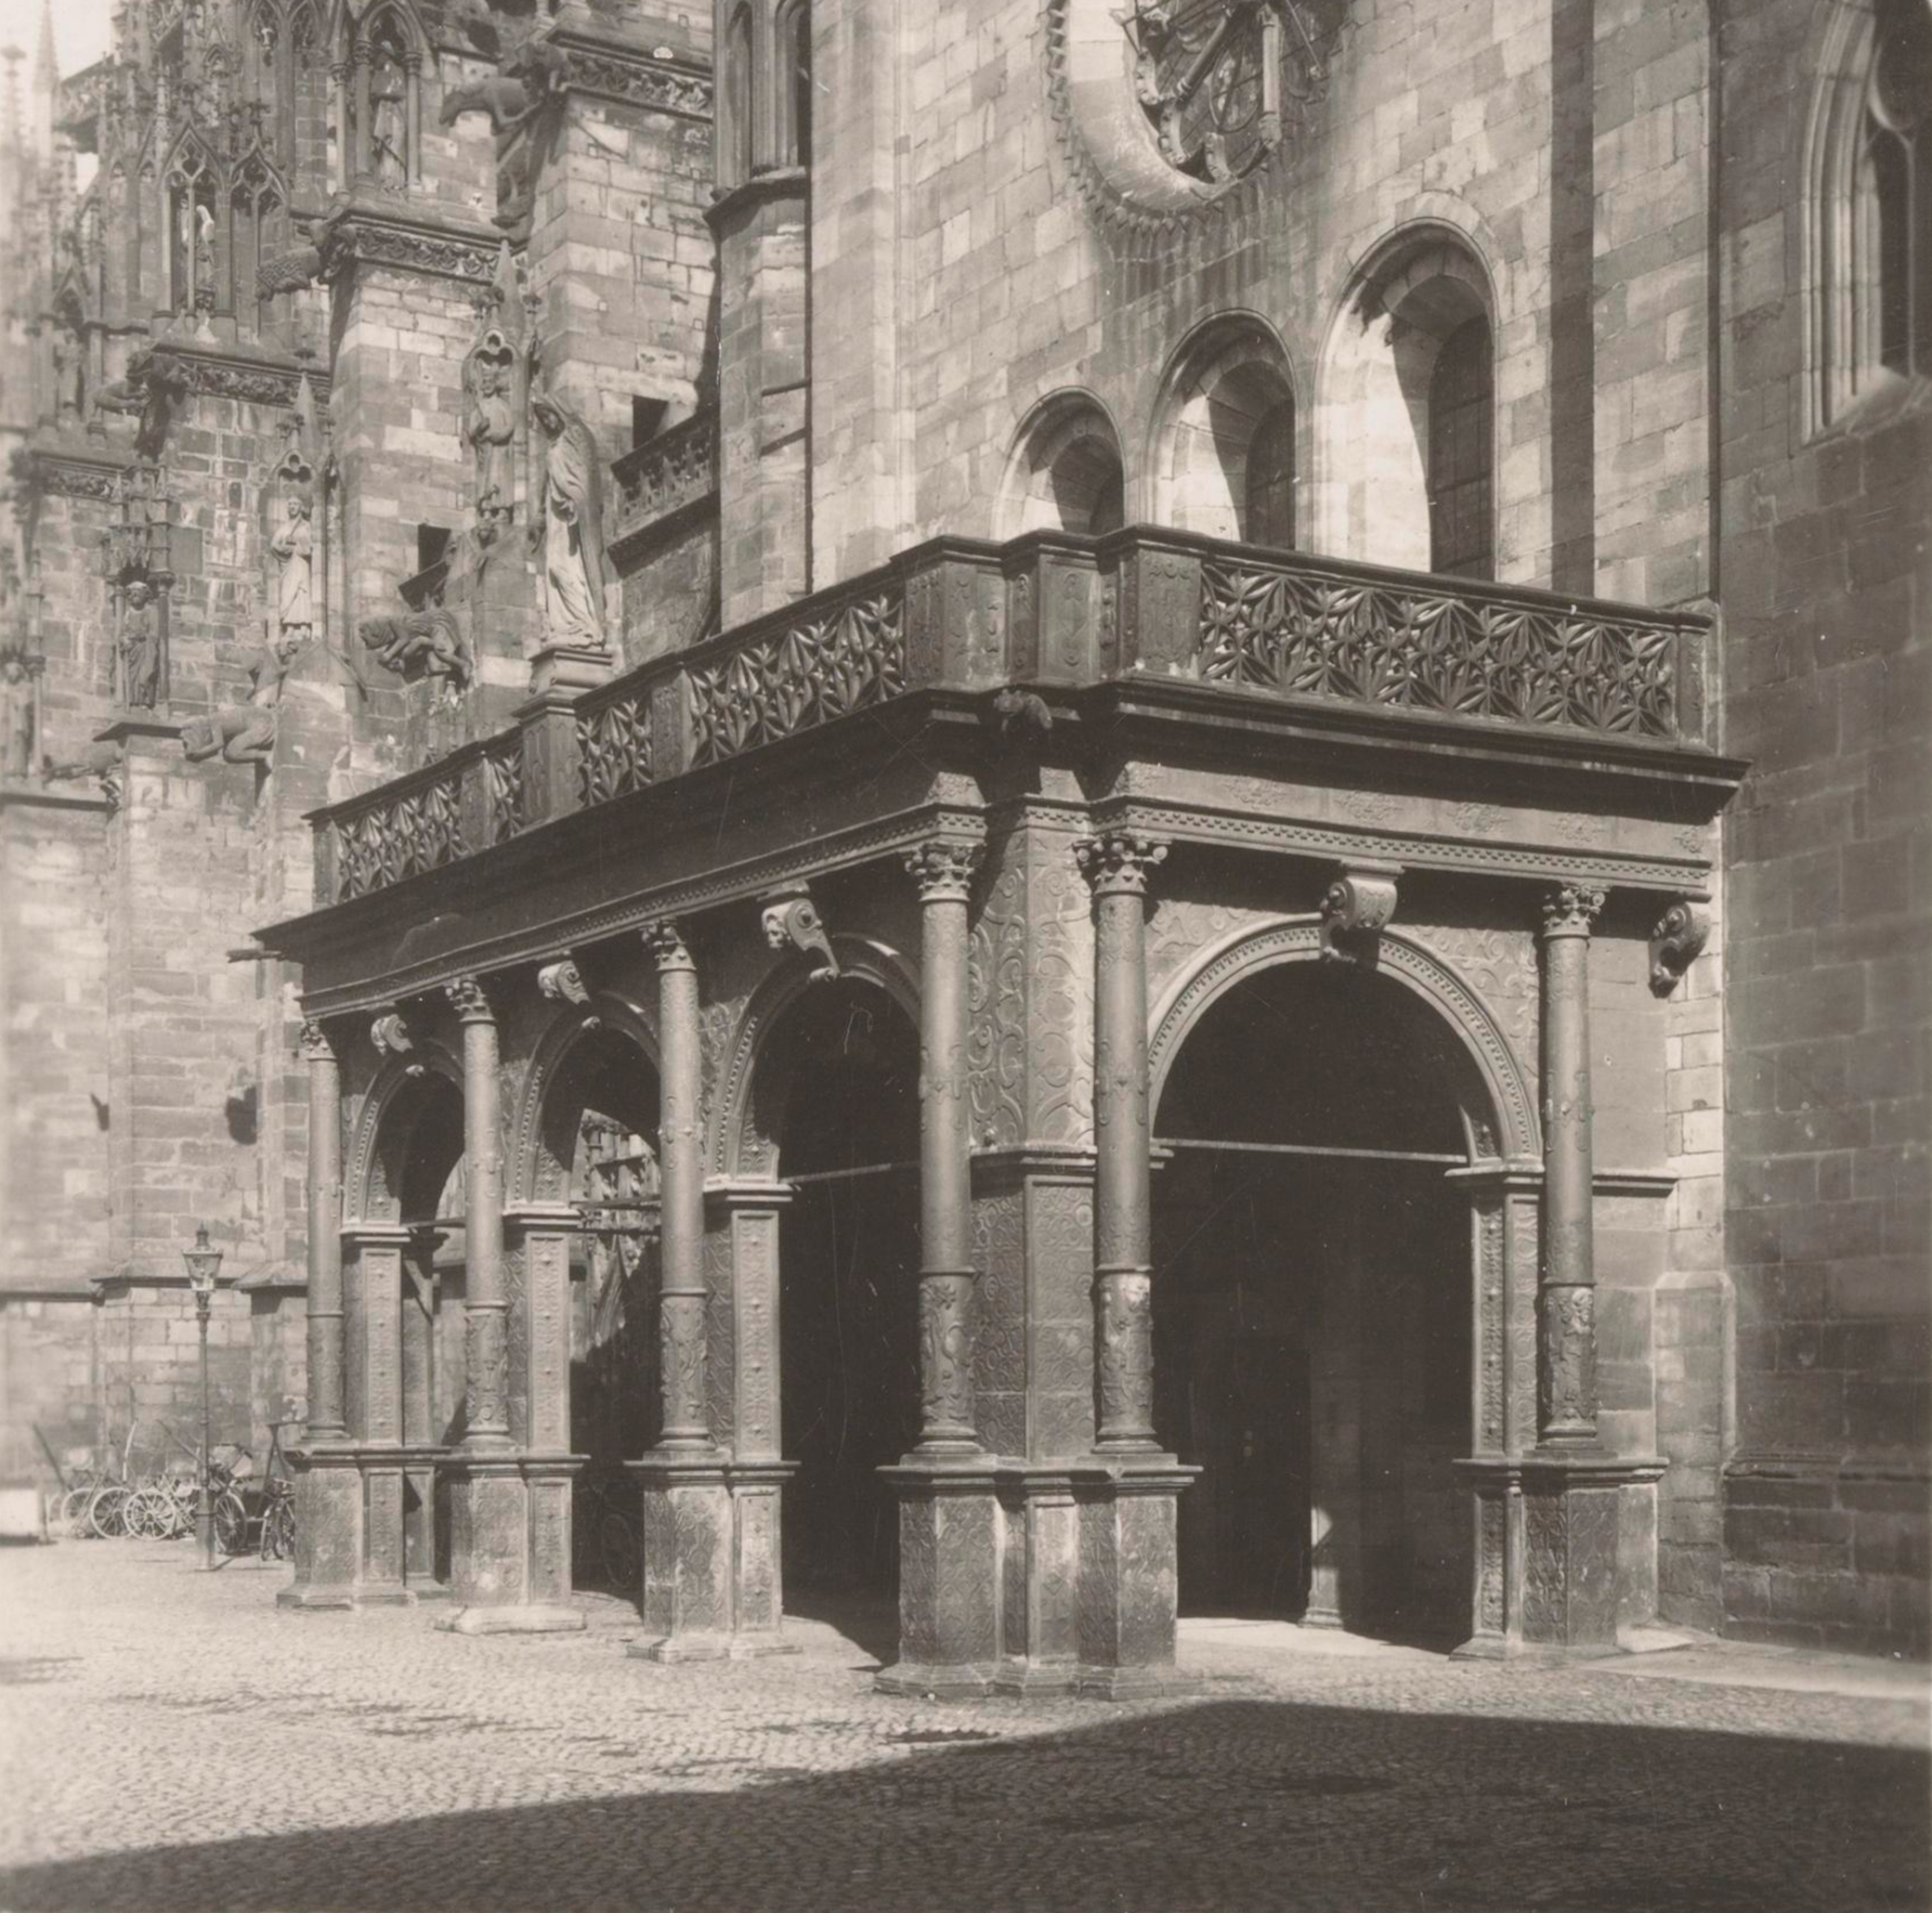 Entrance to Freiburg Minster, 1906. Photograph by Neue Photographische Gesellschaft A.G. Rijksmuseum.